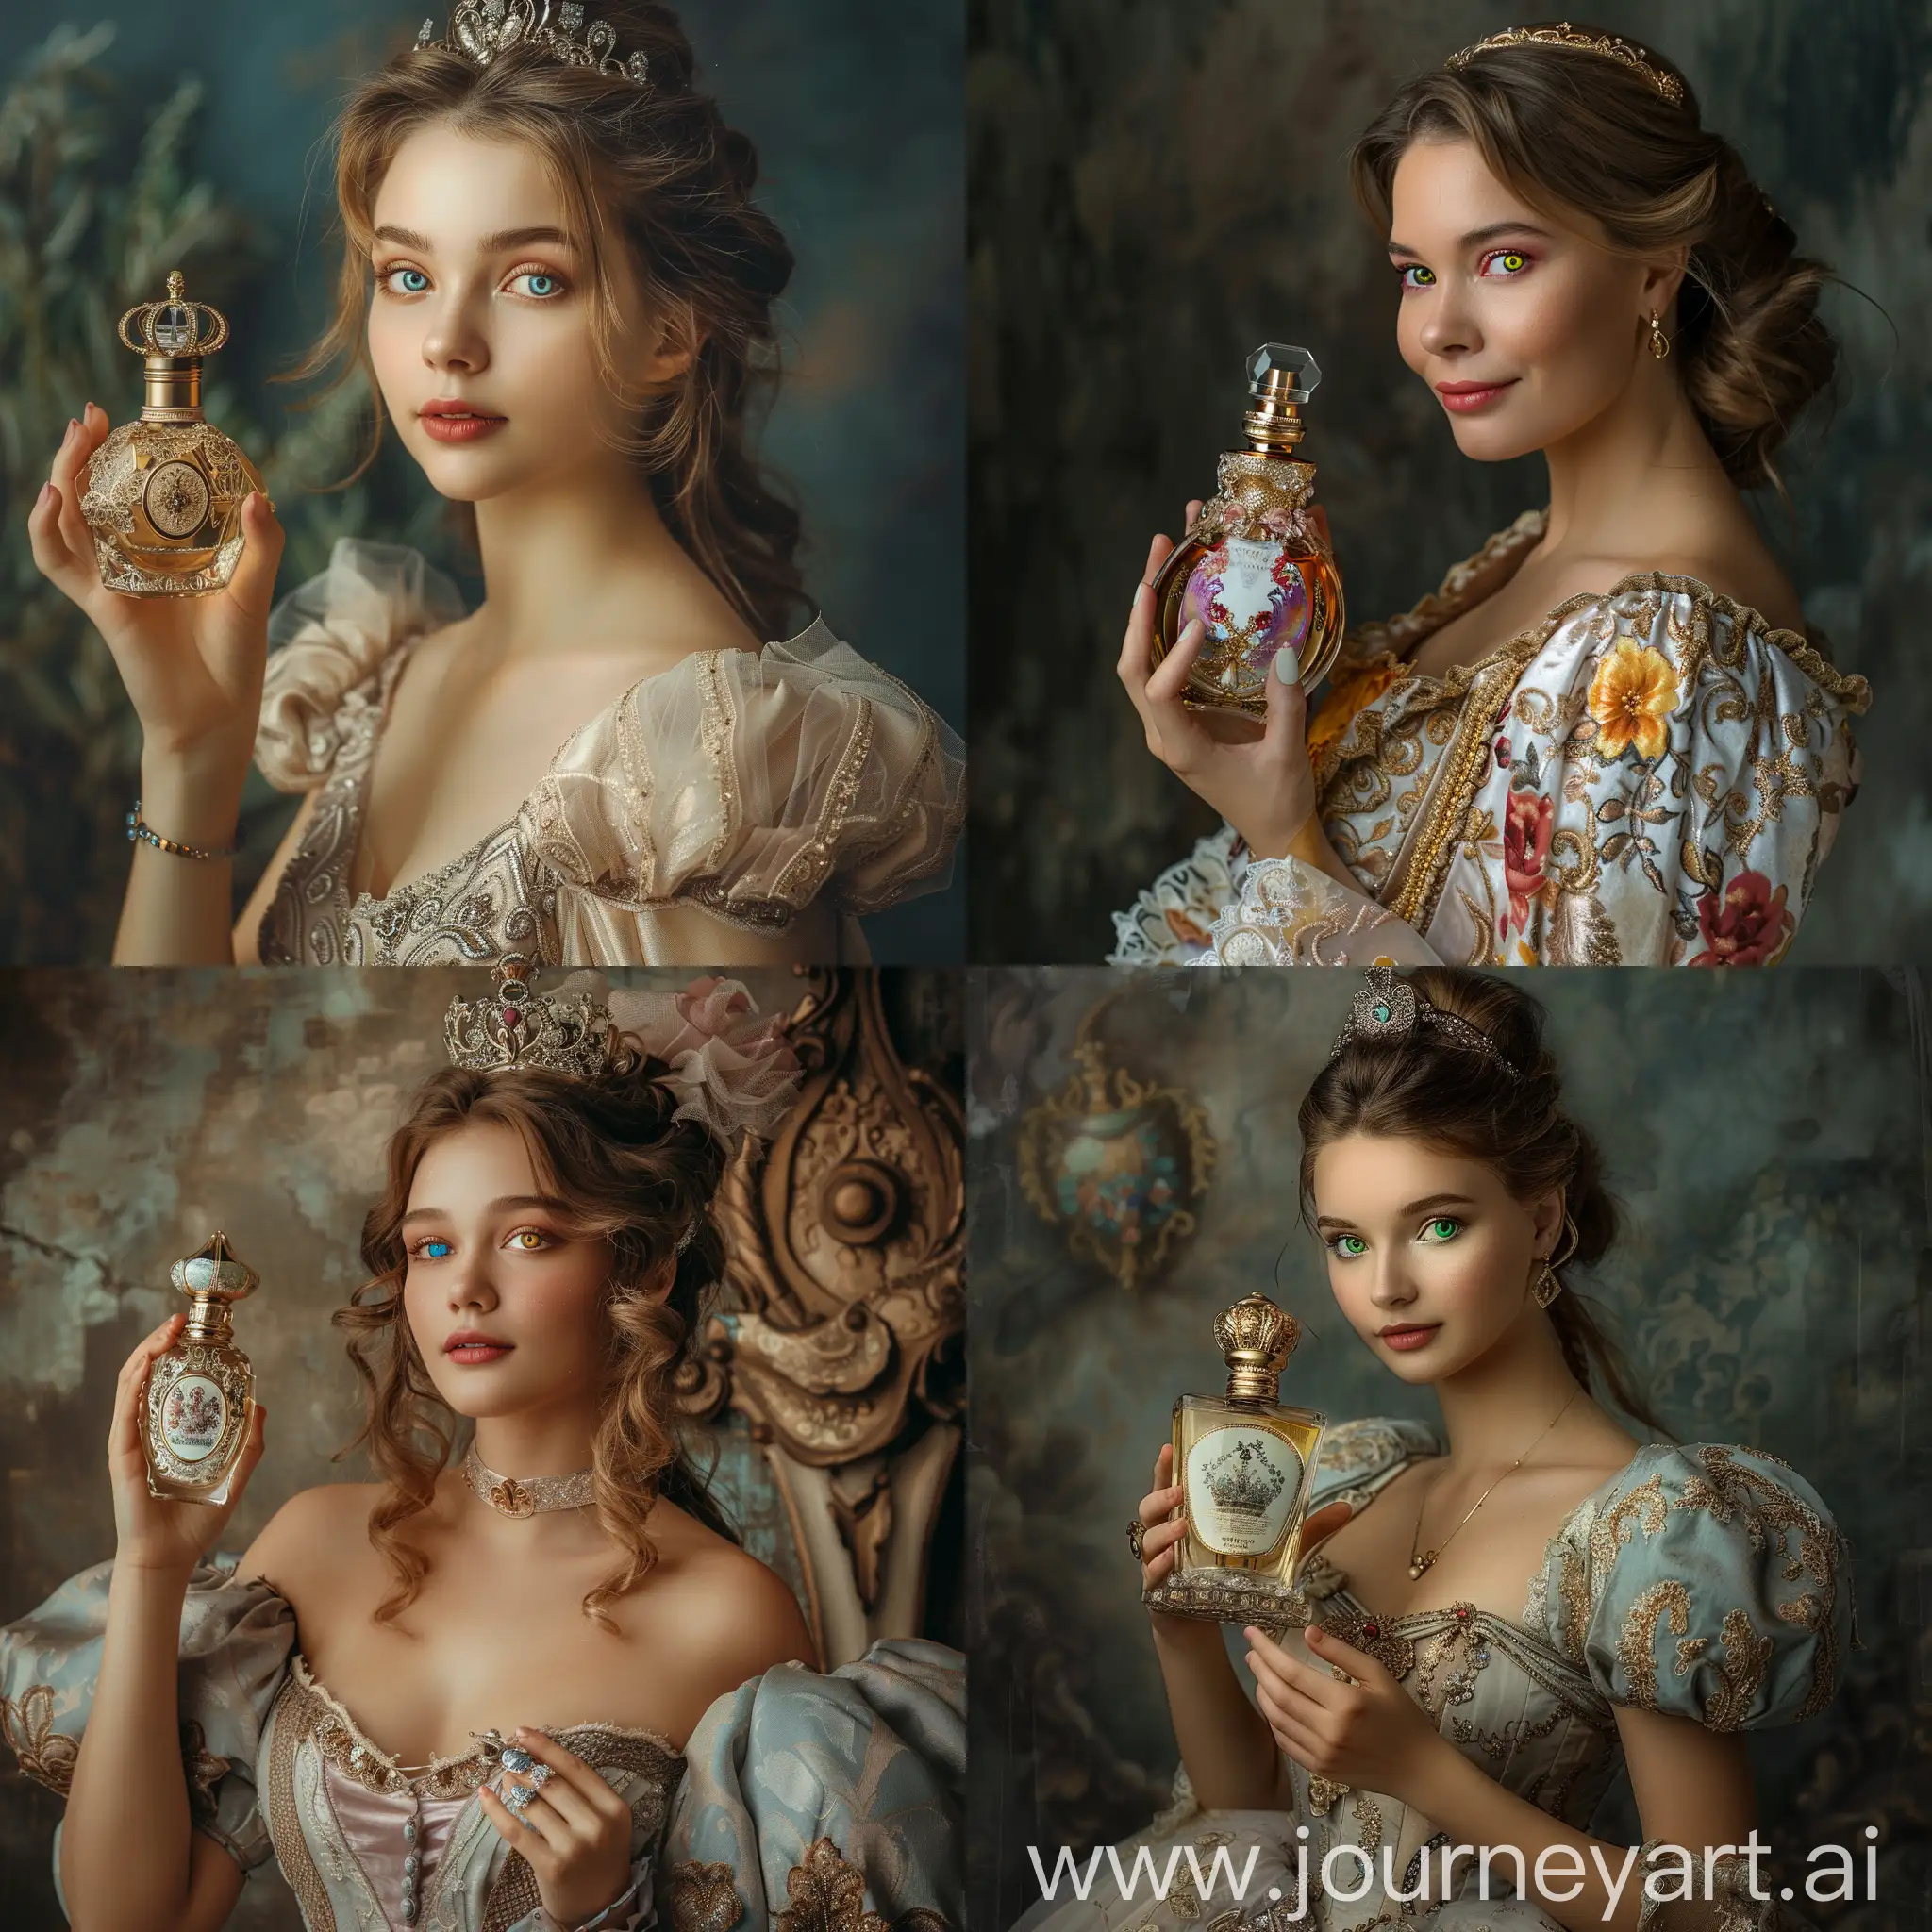 Elegant-Princess-Portrait-with-Perfume-Bottle-Royal-Theme-Studio-Photography